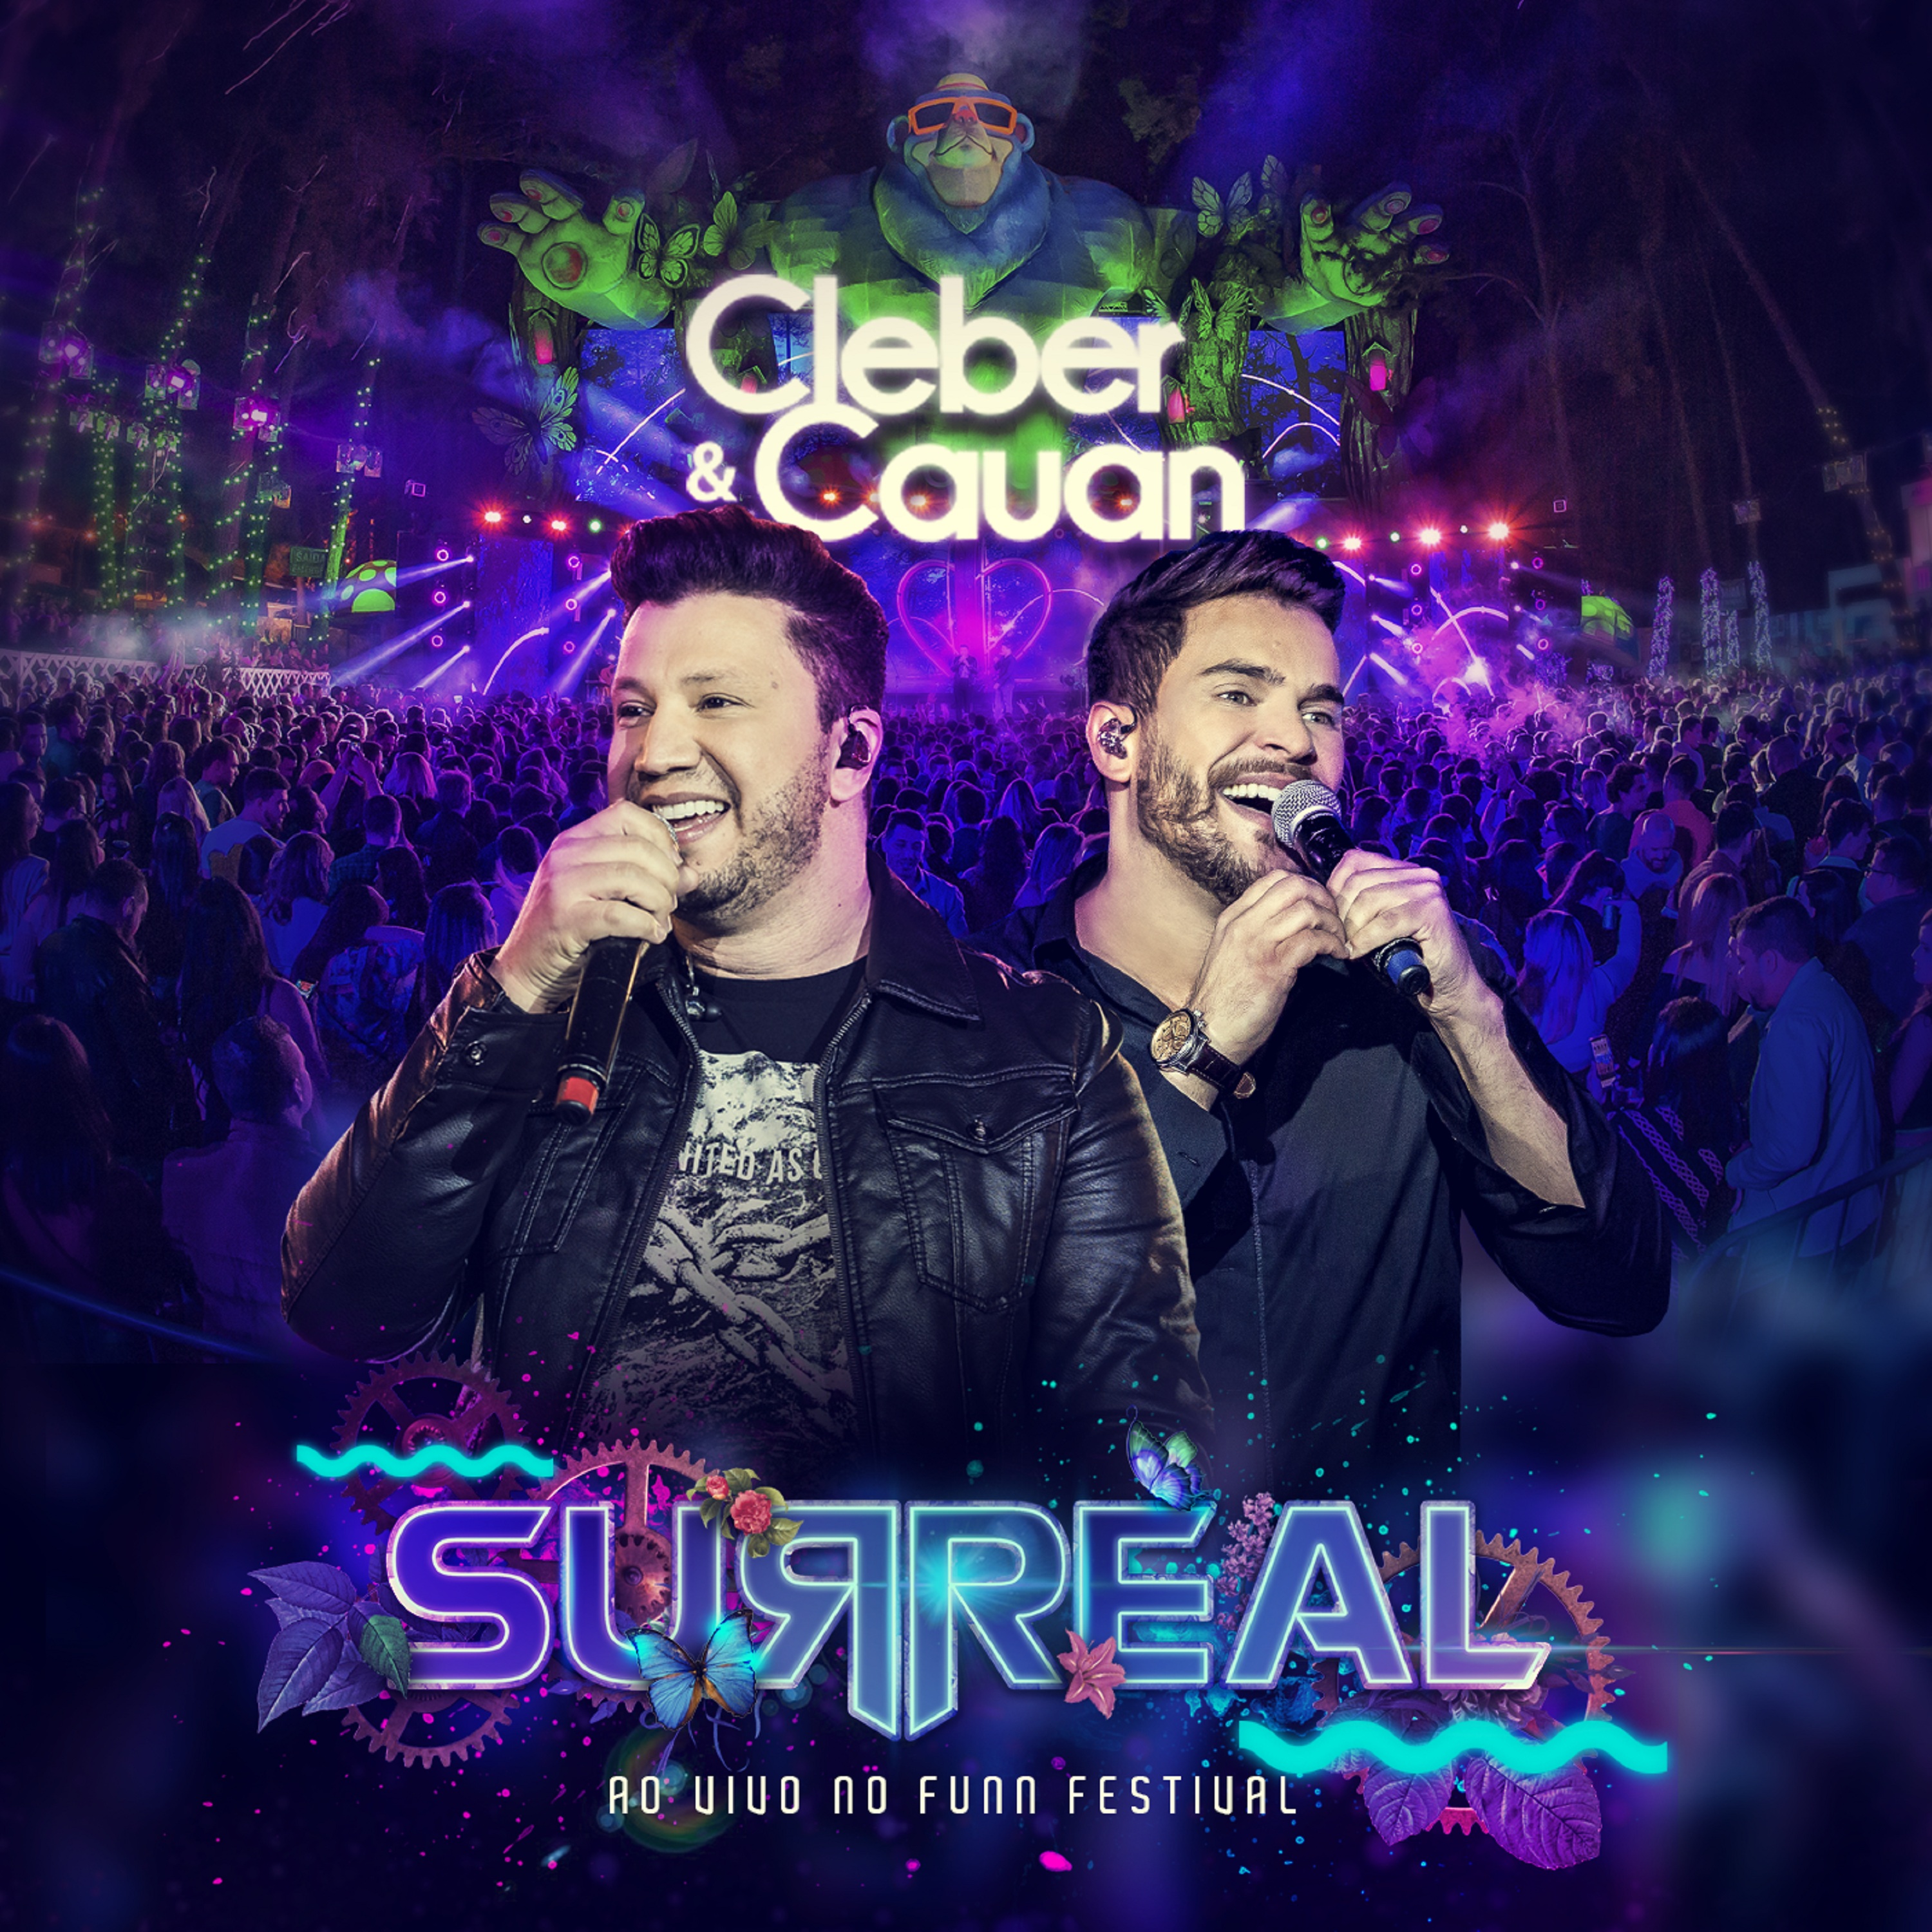 Cleber & Cauan lançaram álbum "Surreal" nesta sexta (06) 41